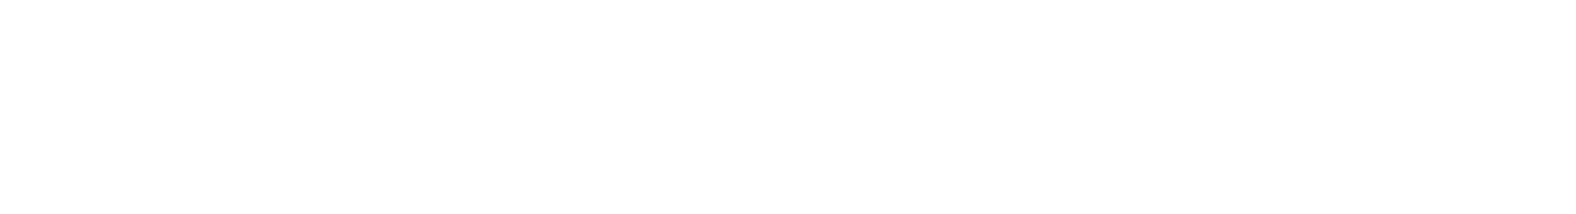 Savers Value Village Logo groß für dunkle Hintergründe (transparentes PNG)